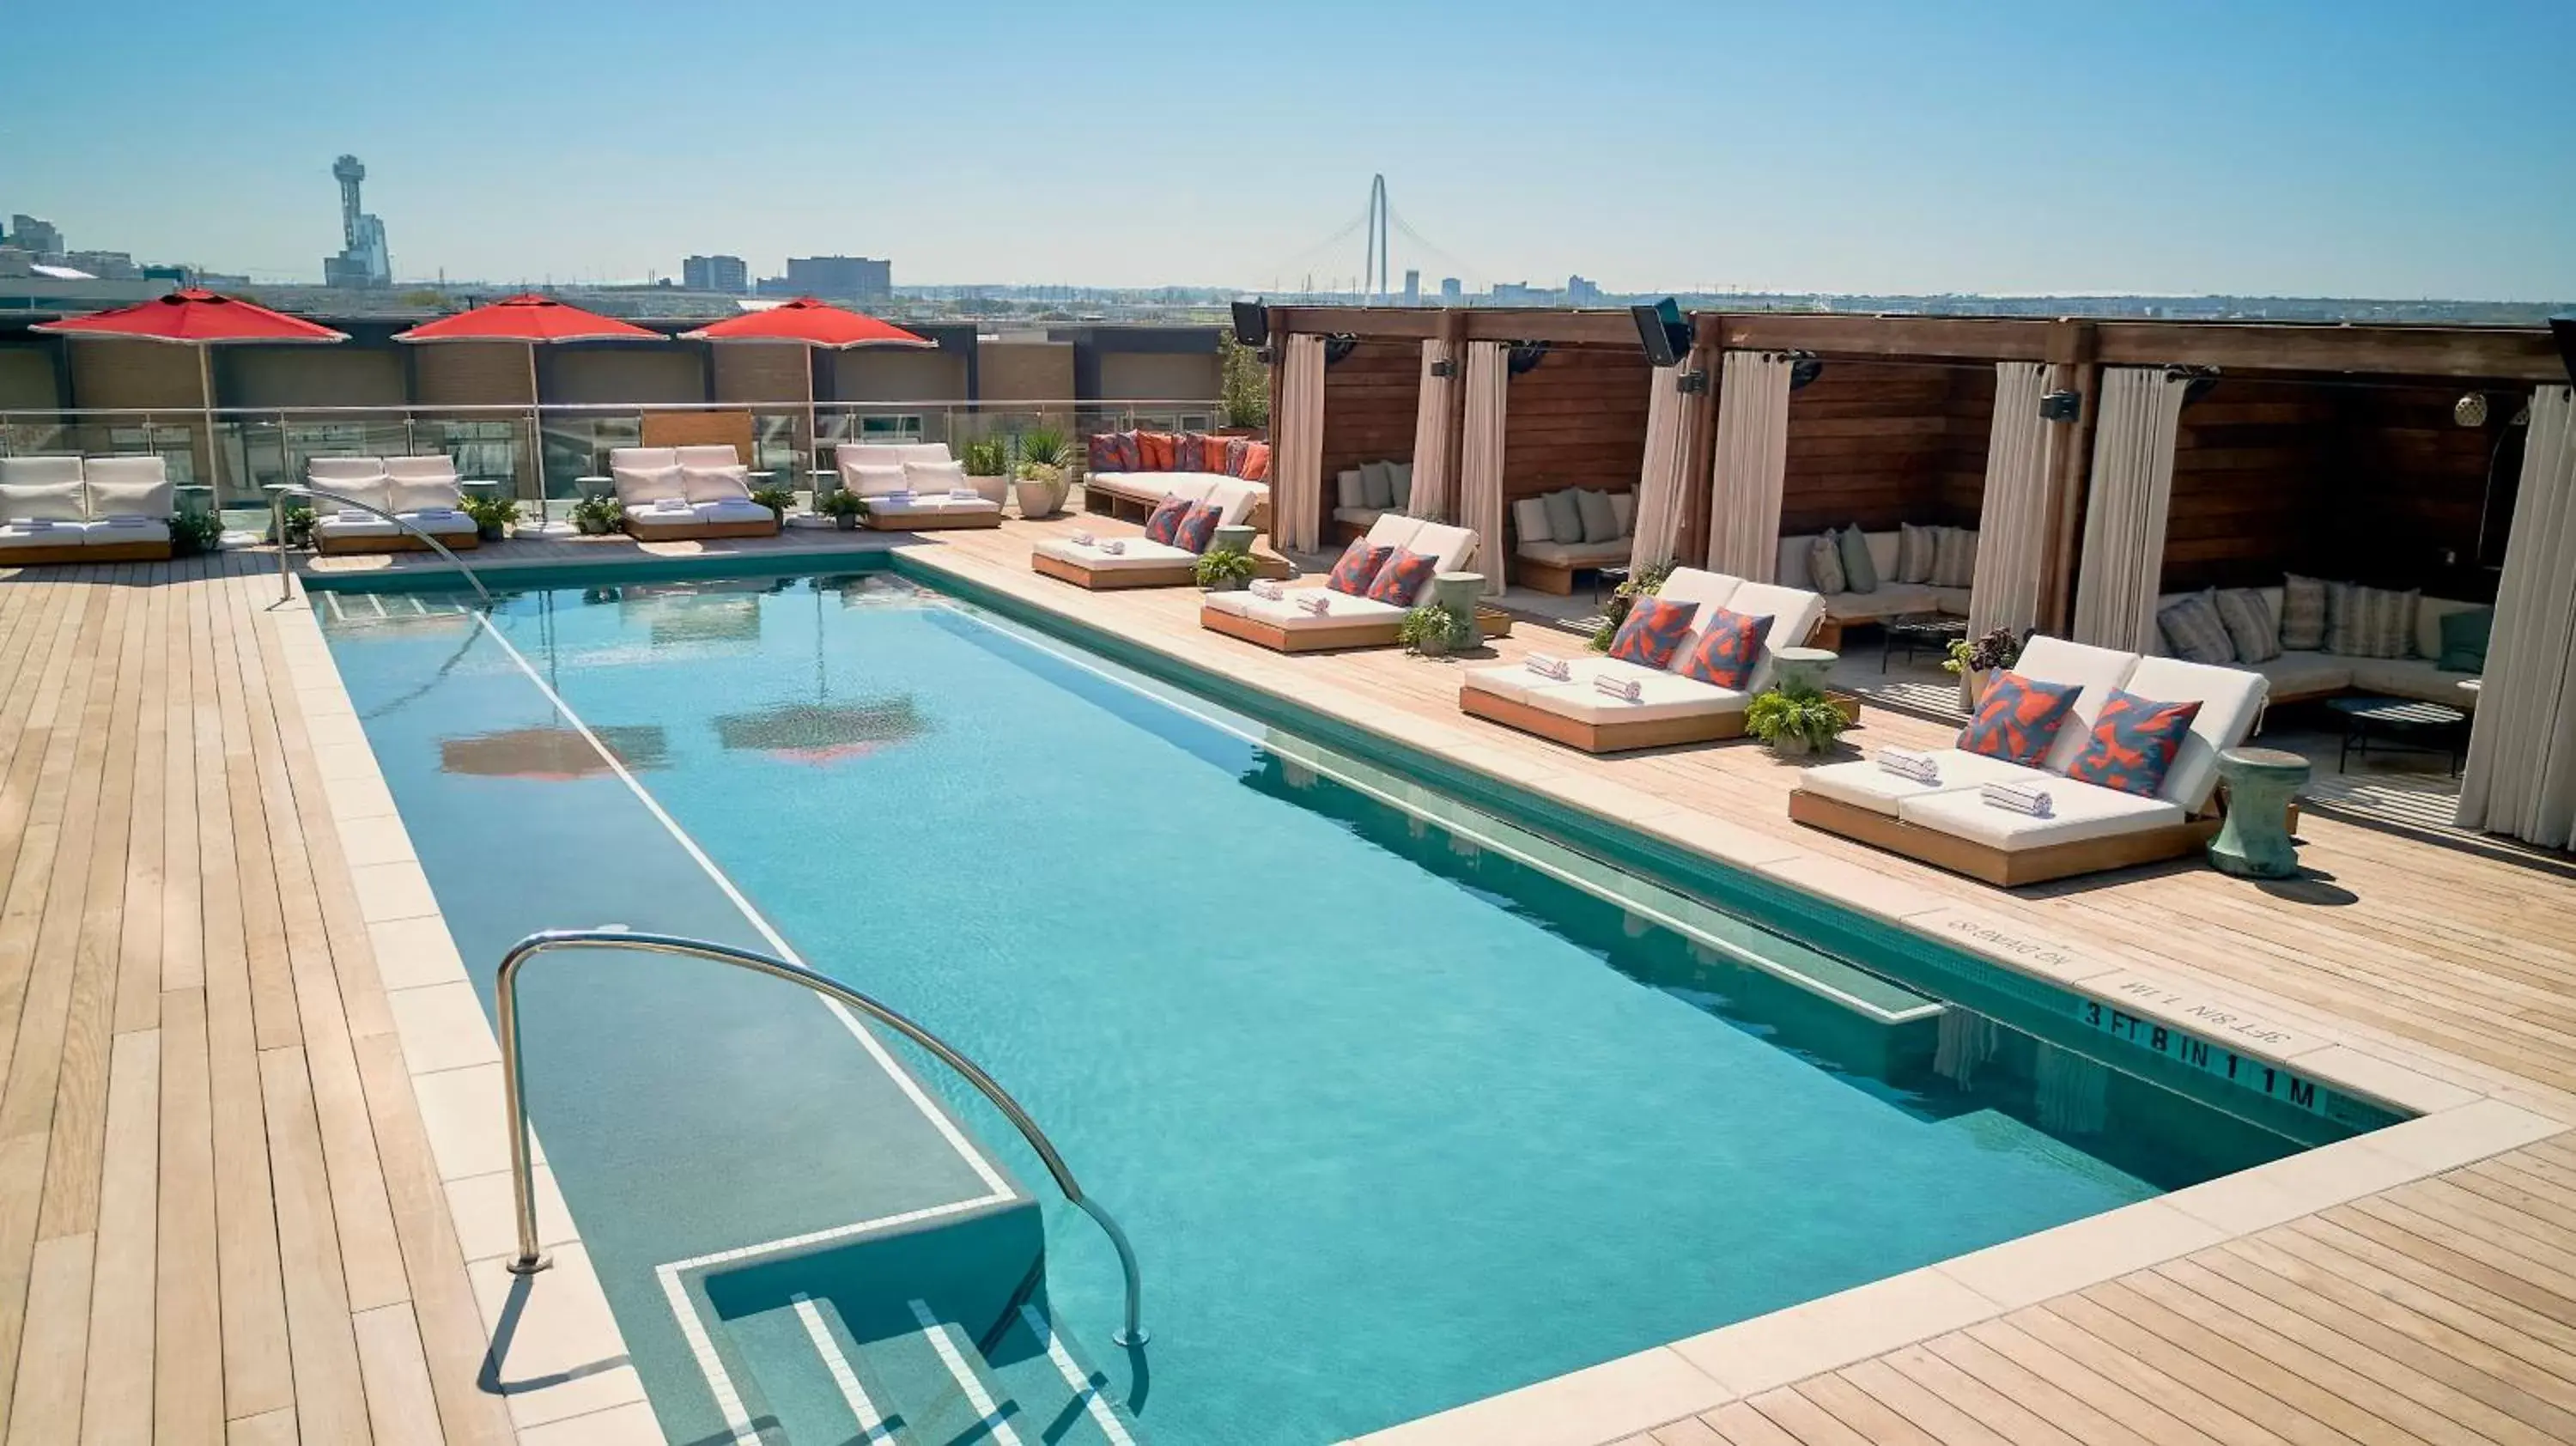 Swimming Pool in Virgin Hotels Dallas